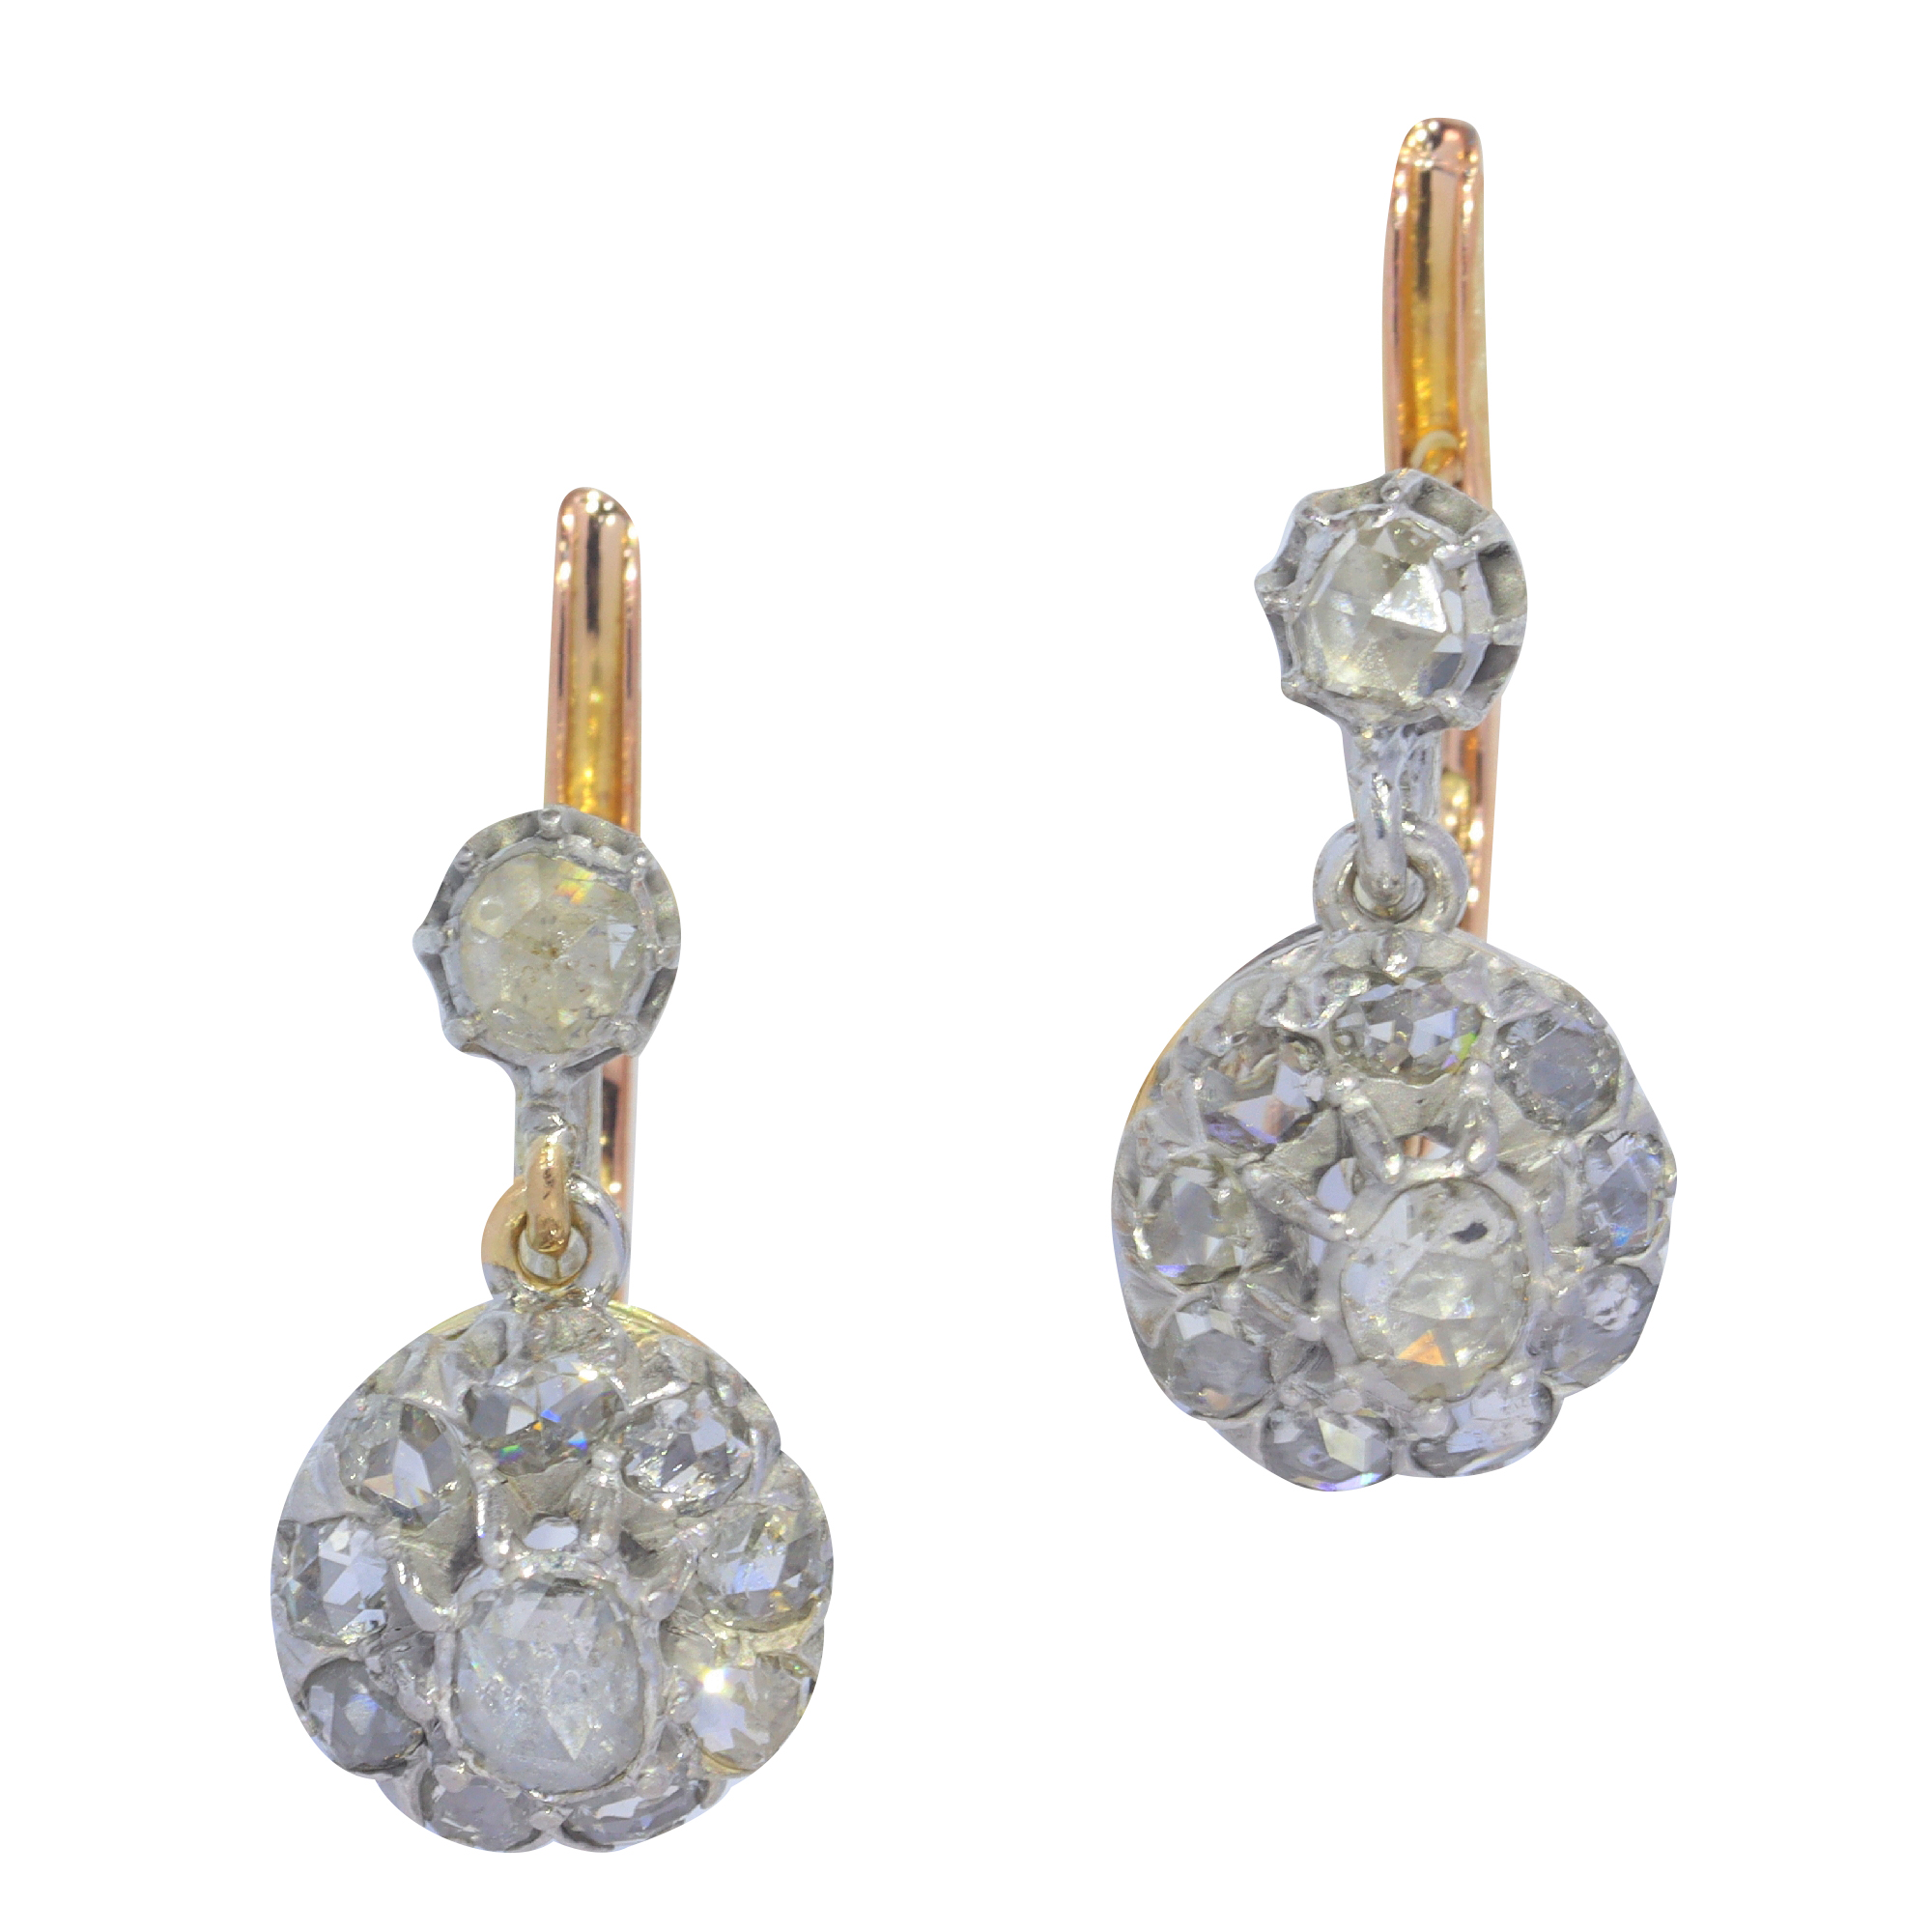 Vintage pendent diamond earrings